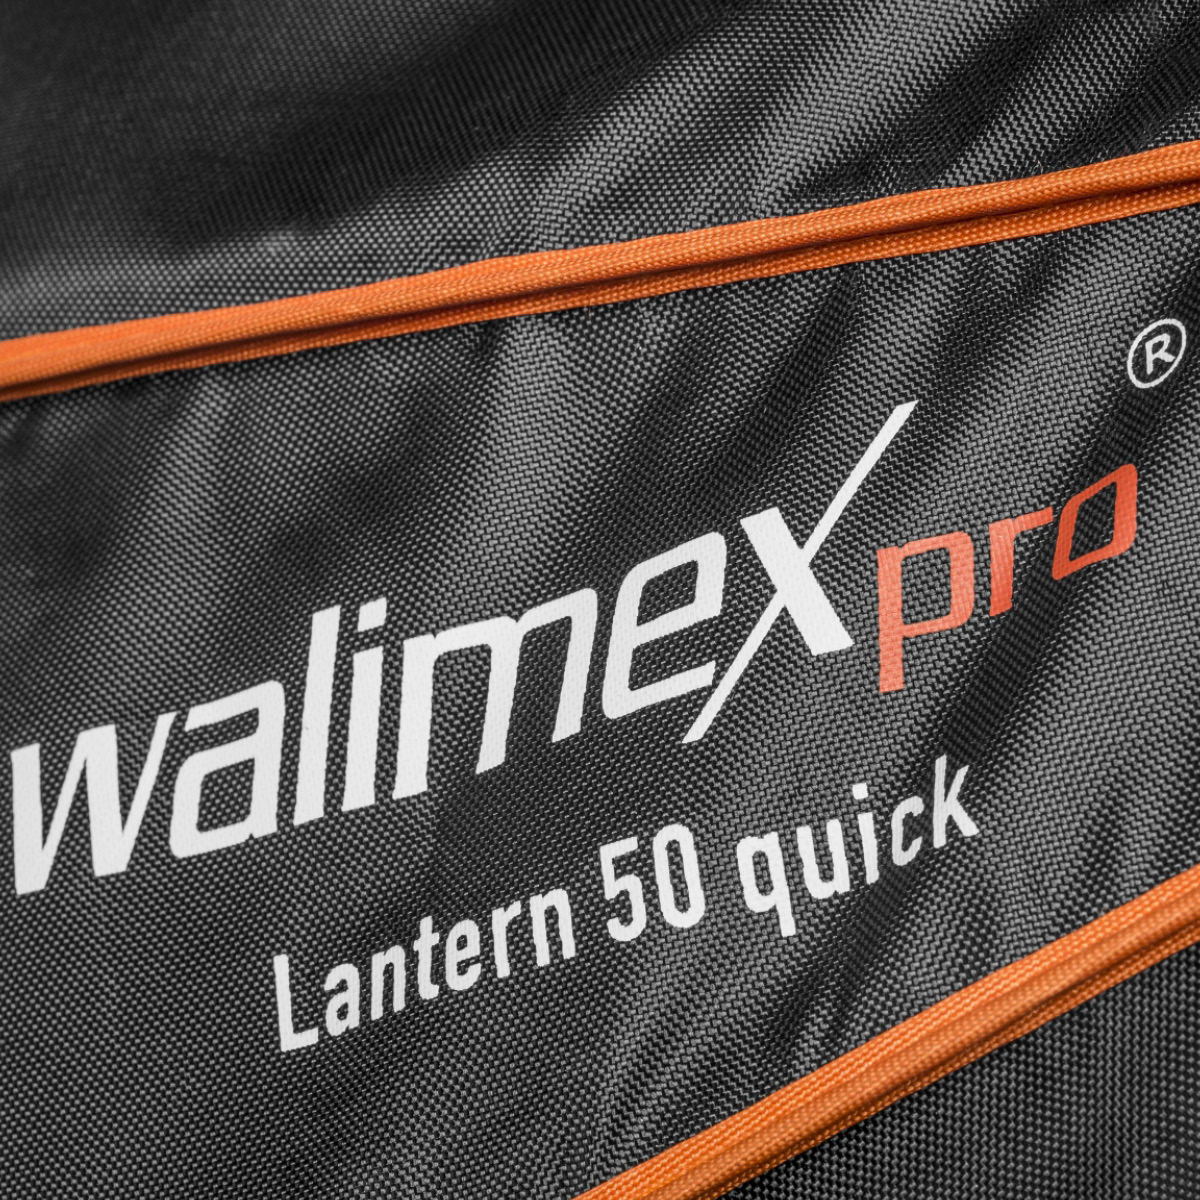 Walimex pro 360° Ambient Light Softbox 50 cm Balcar